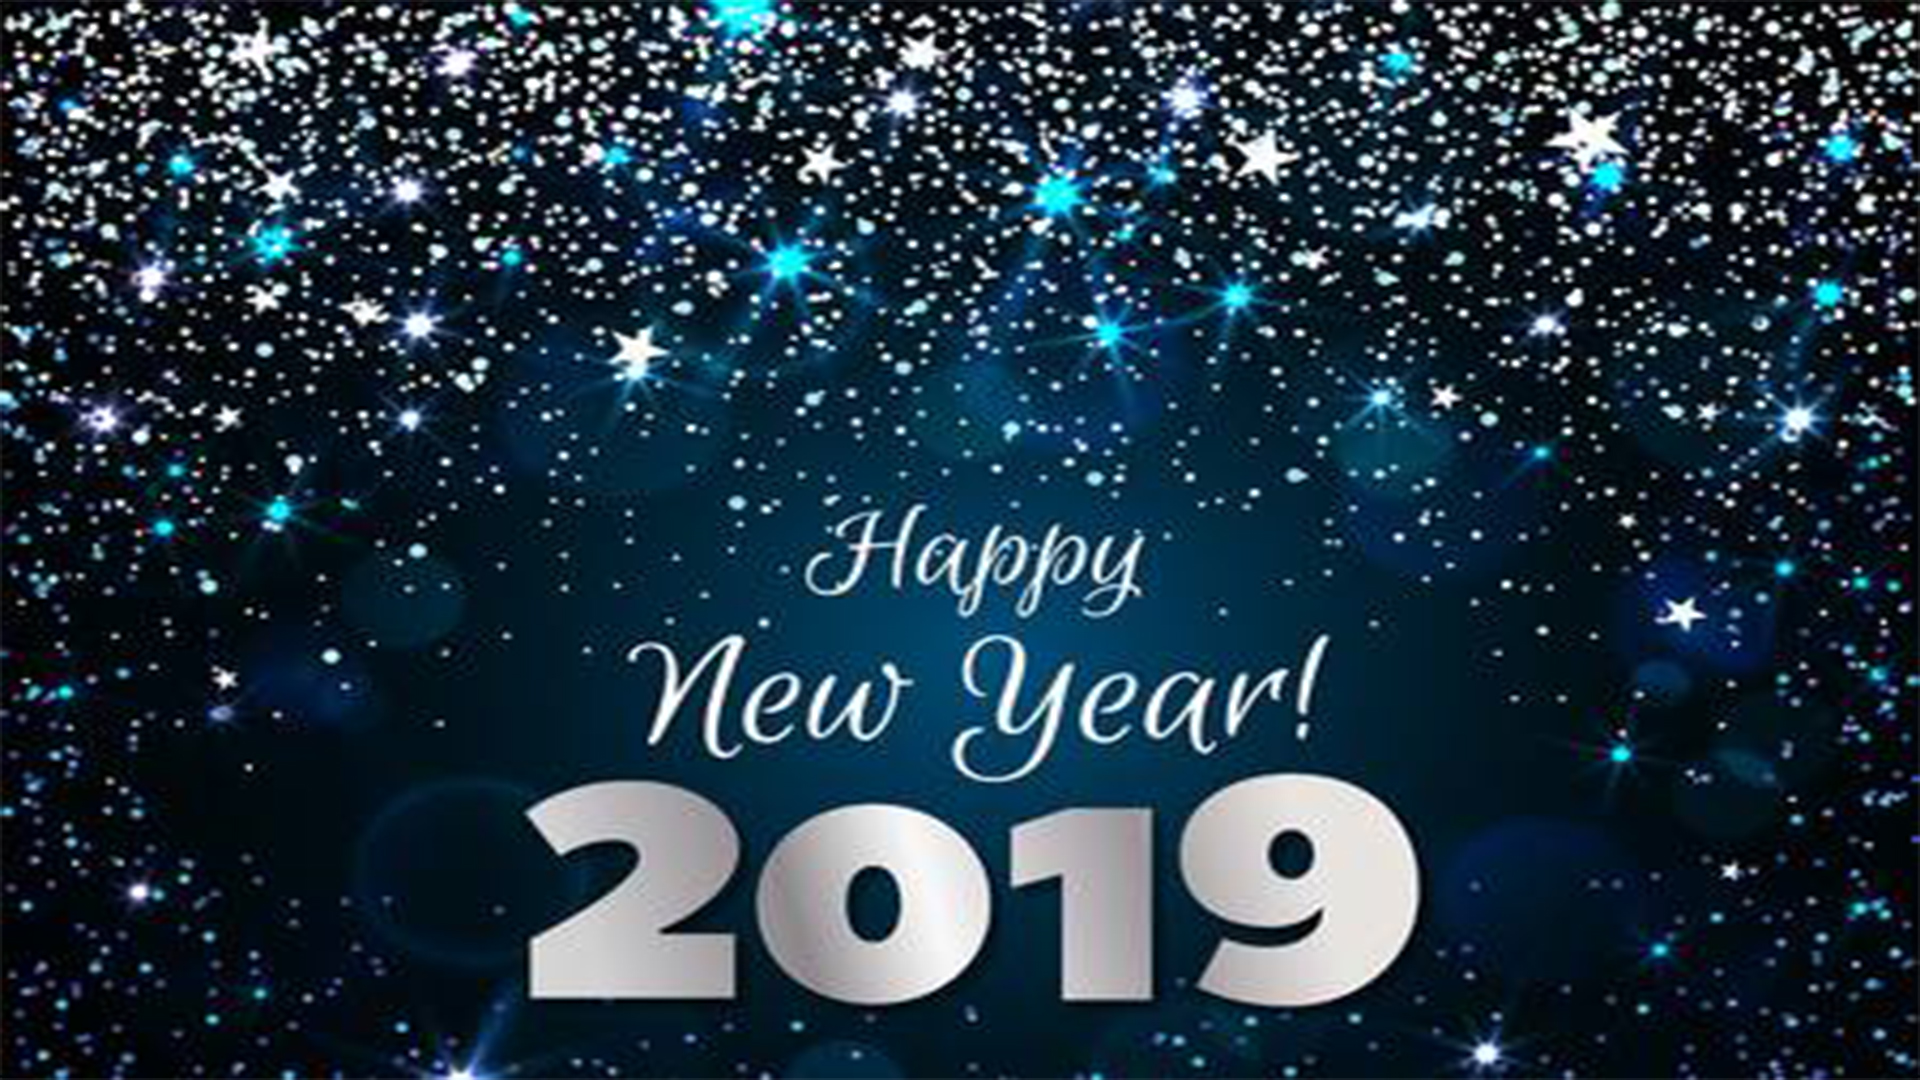 new year 2019 hd image